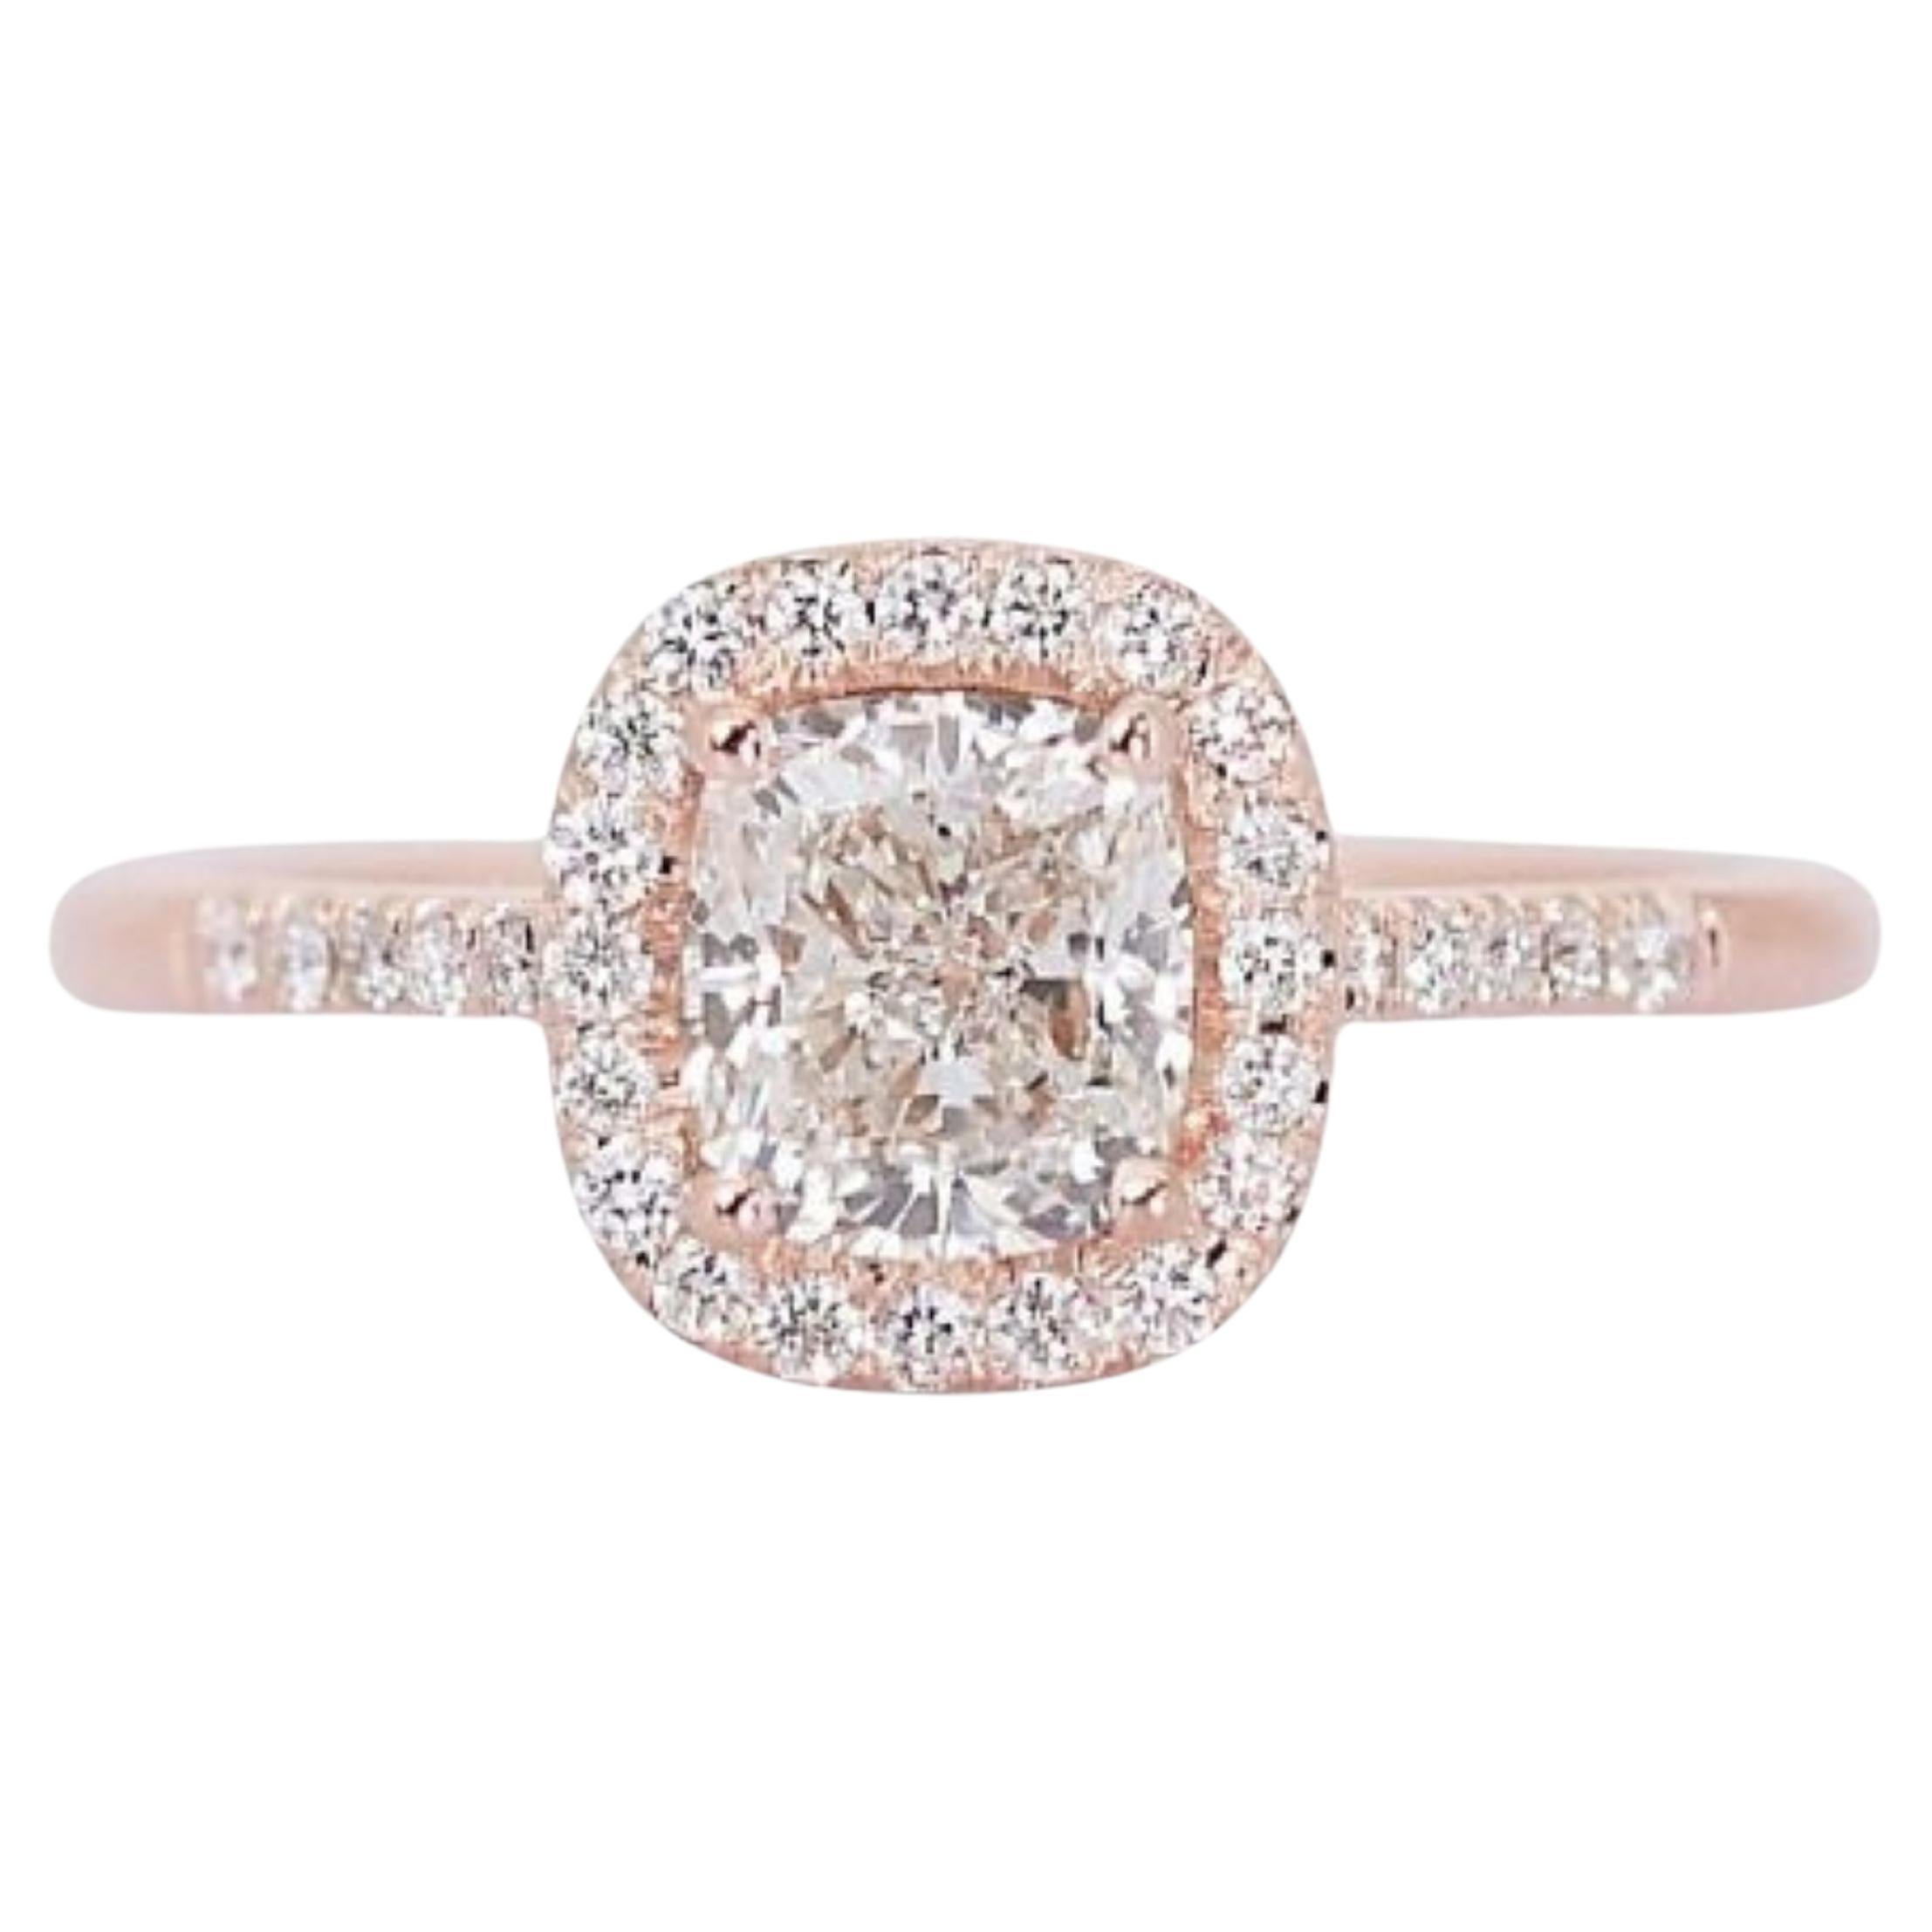 Stunning 18K Rose Gold Ring with Dazzling 1 carat Cushion Shape Natural Diamond